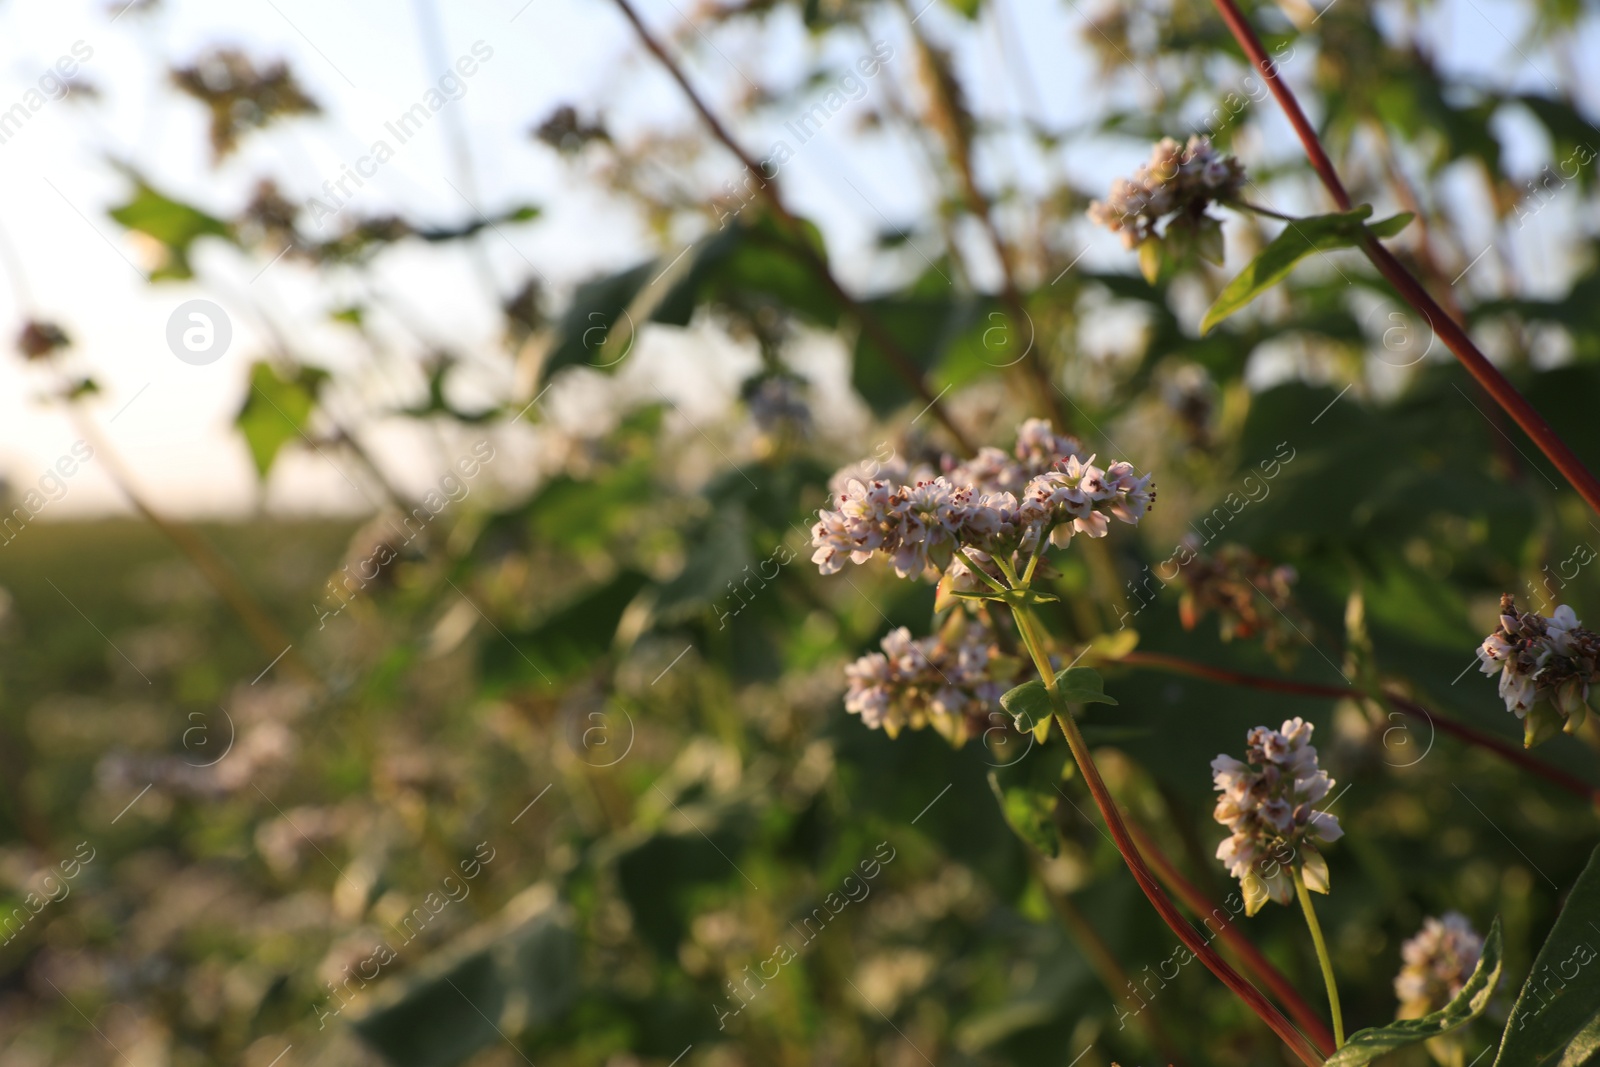 Photo of Beautiful blossoming buckwheat field on sunny day, closeup view